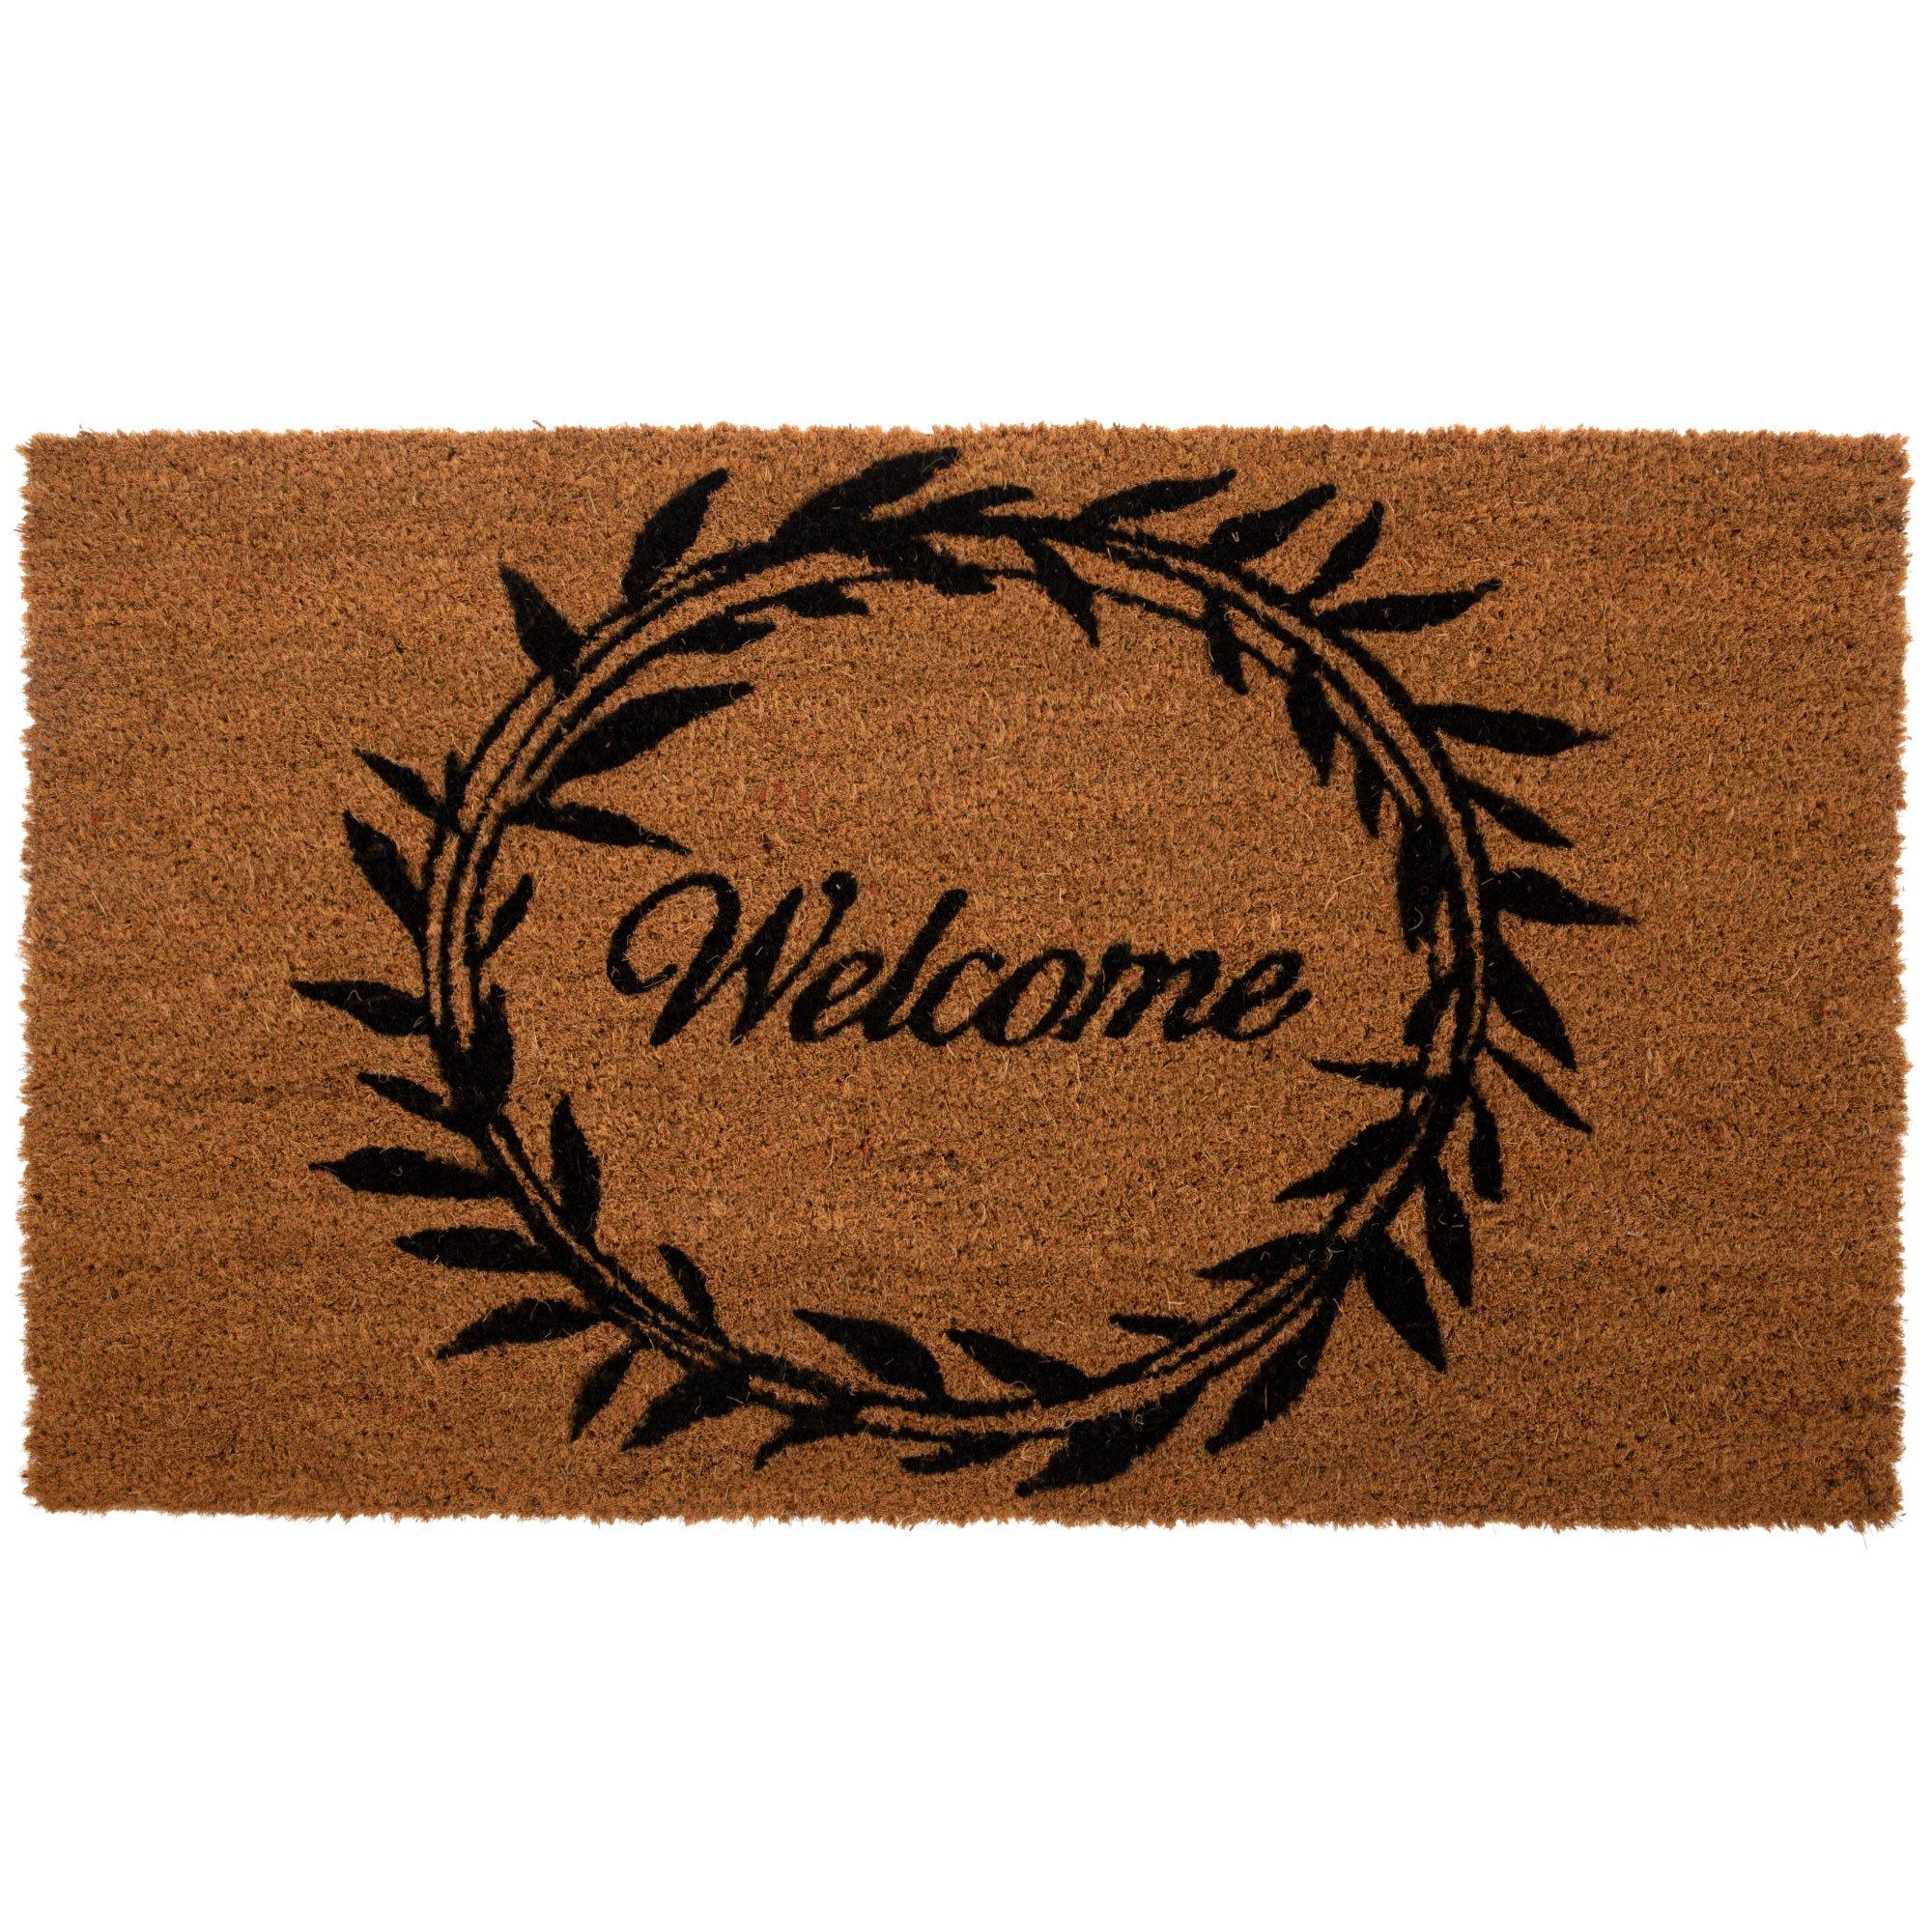 Welcome Buffalo Check Doormat, Hobby Lobby